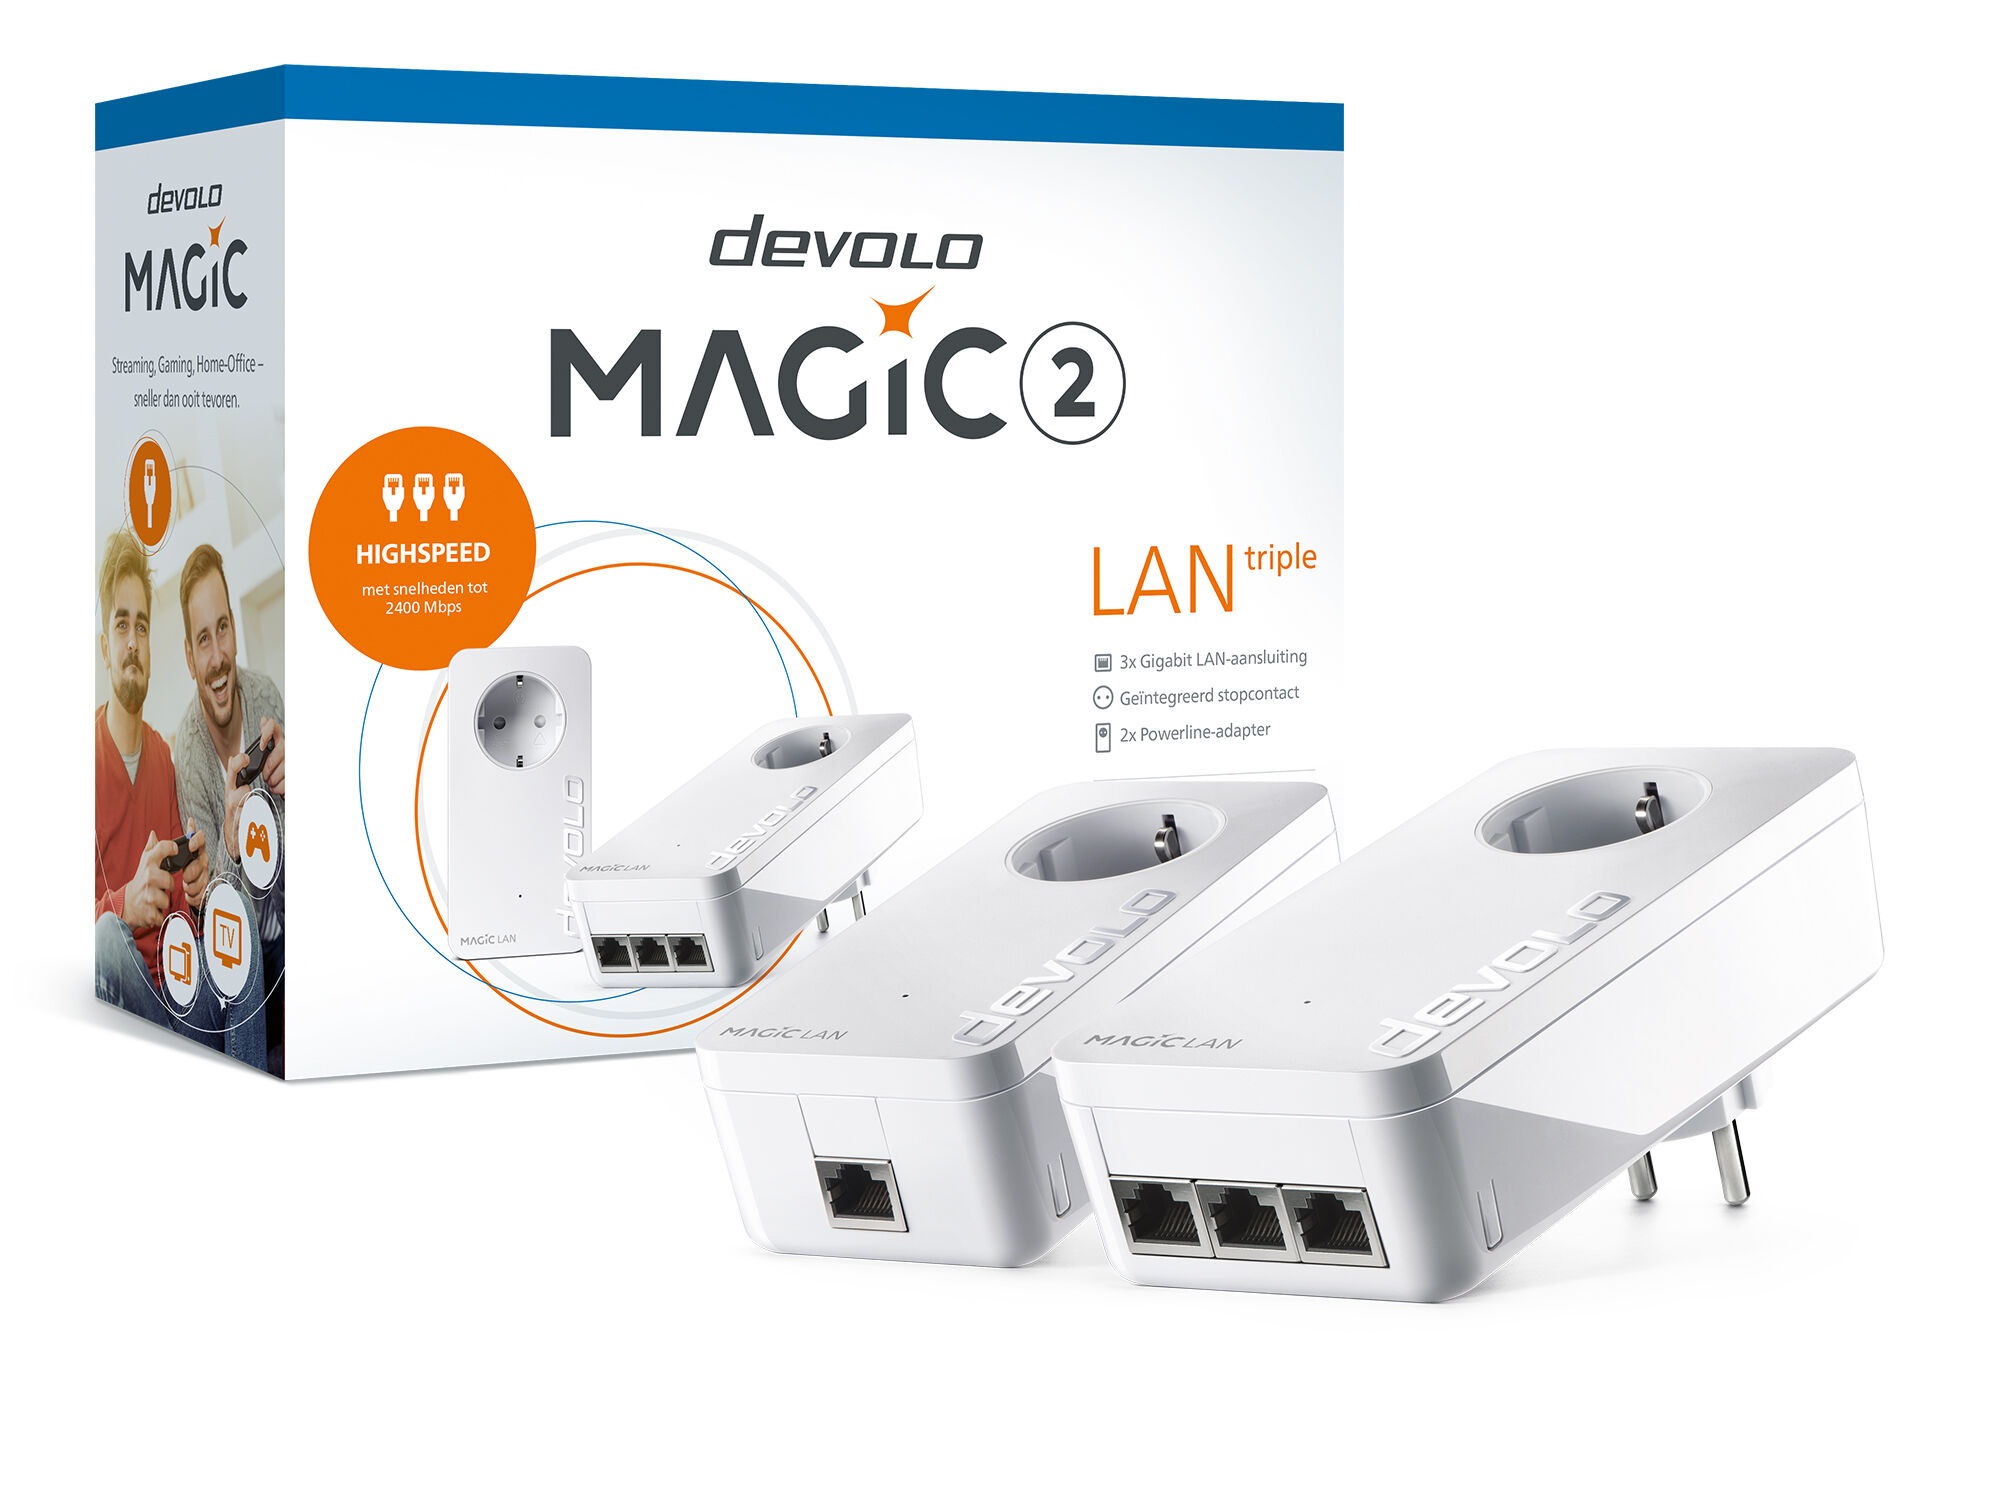 devolo Magic 2 LAN triple Starter Kit (NL)